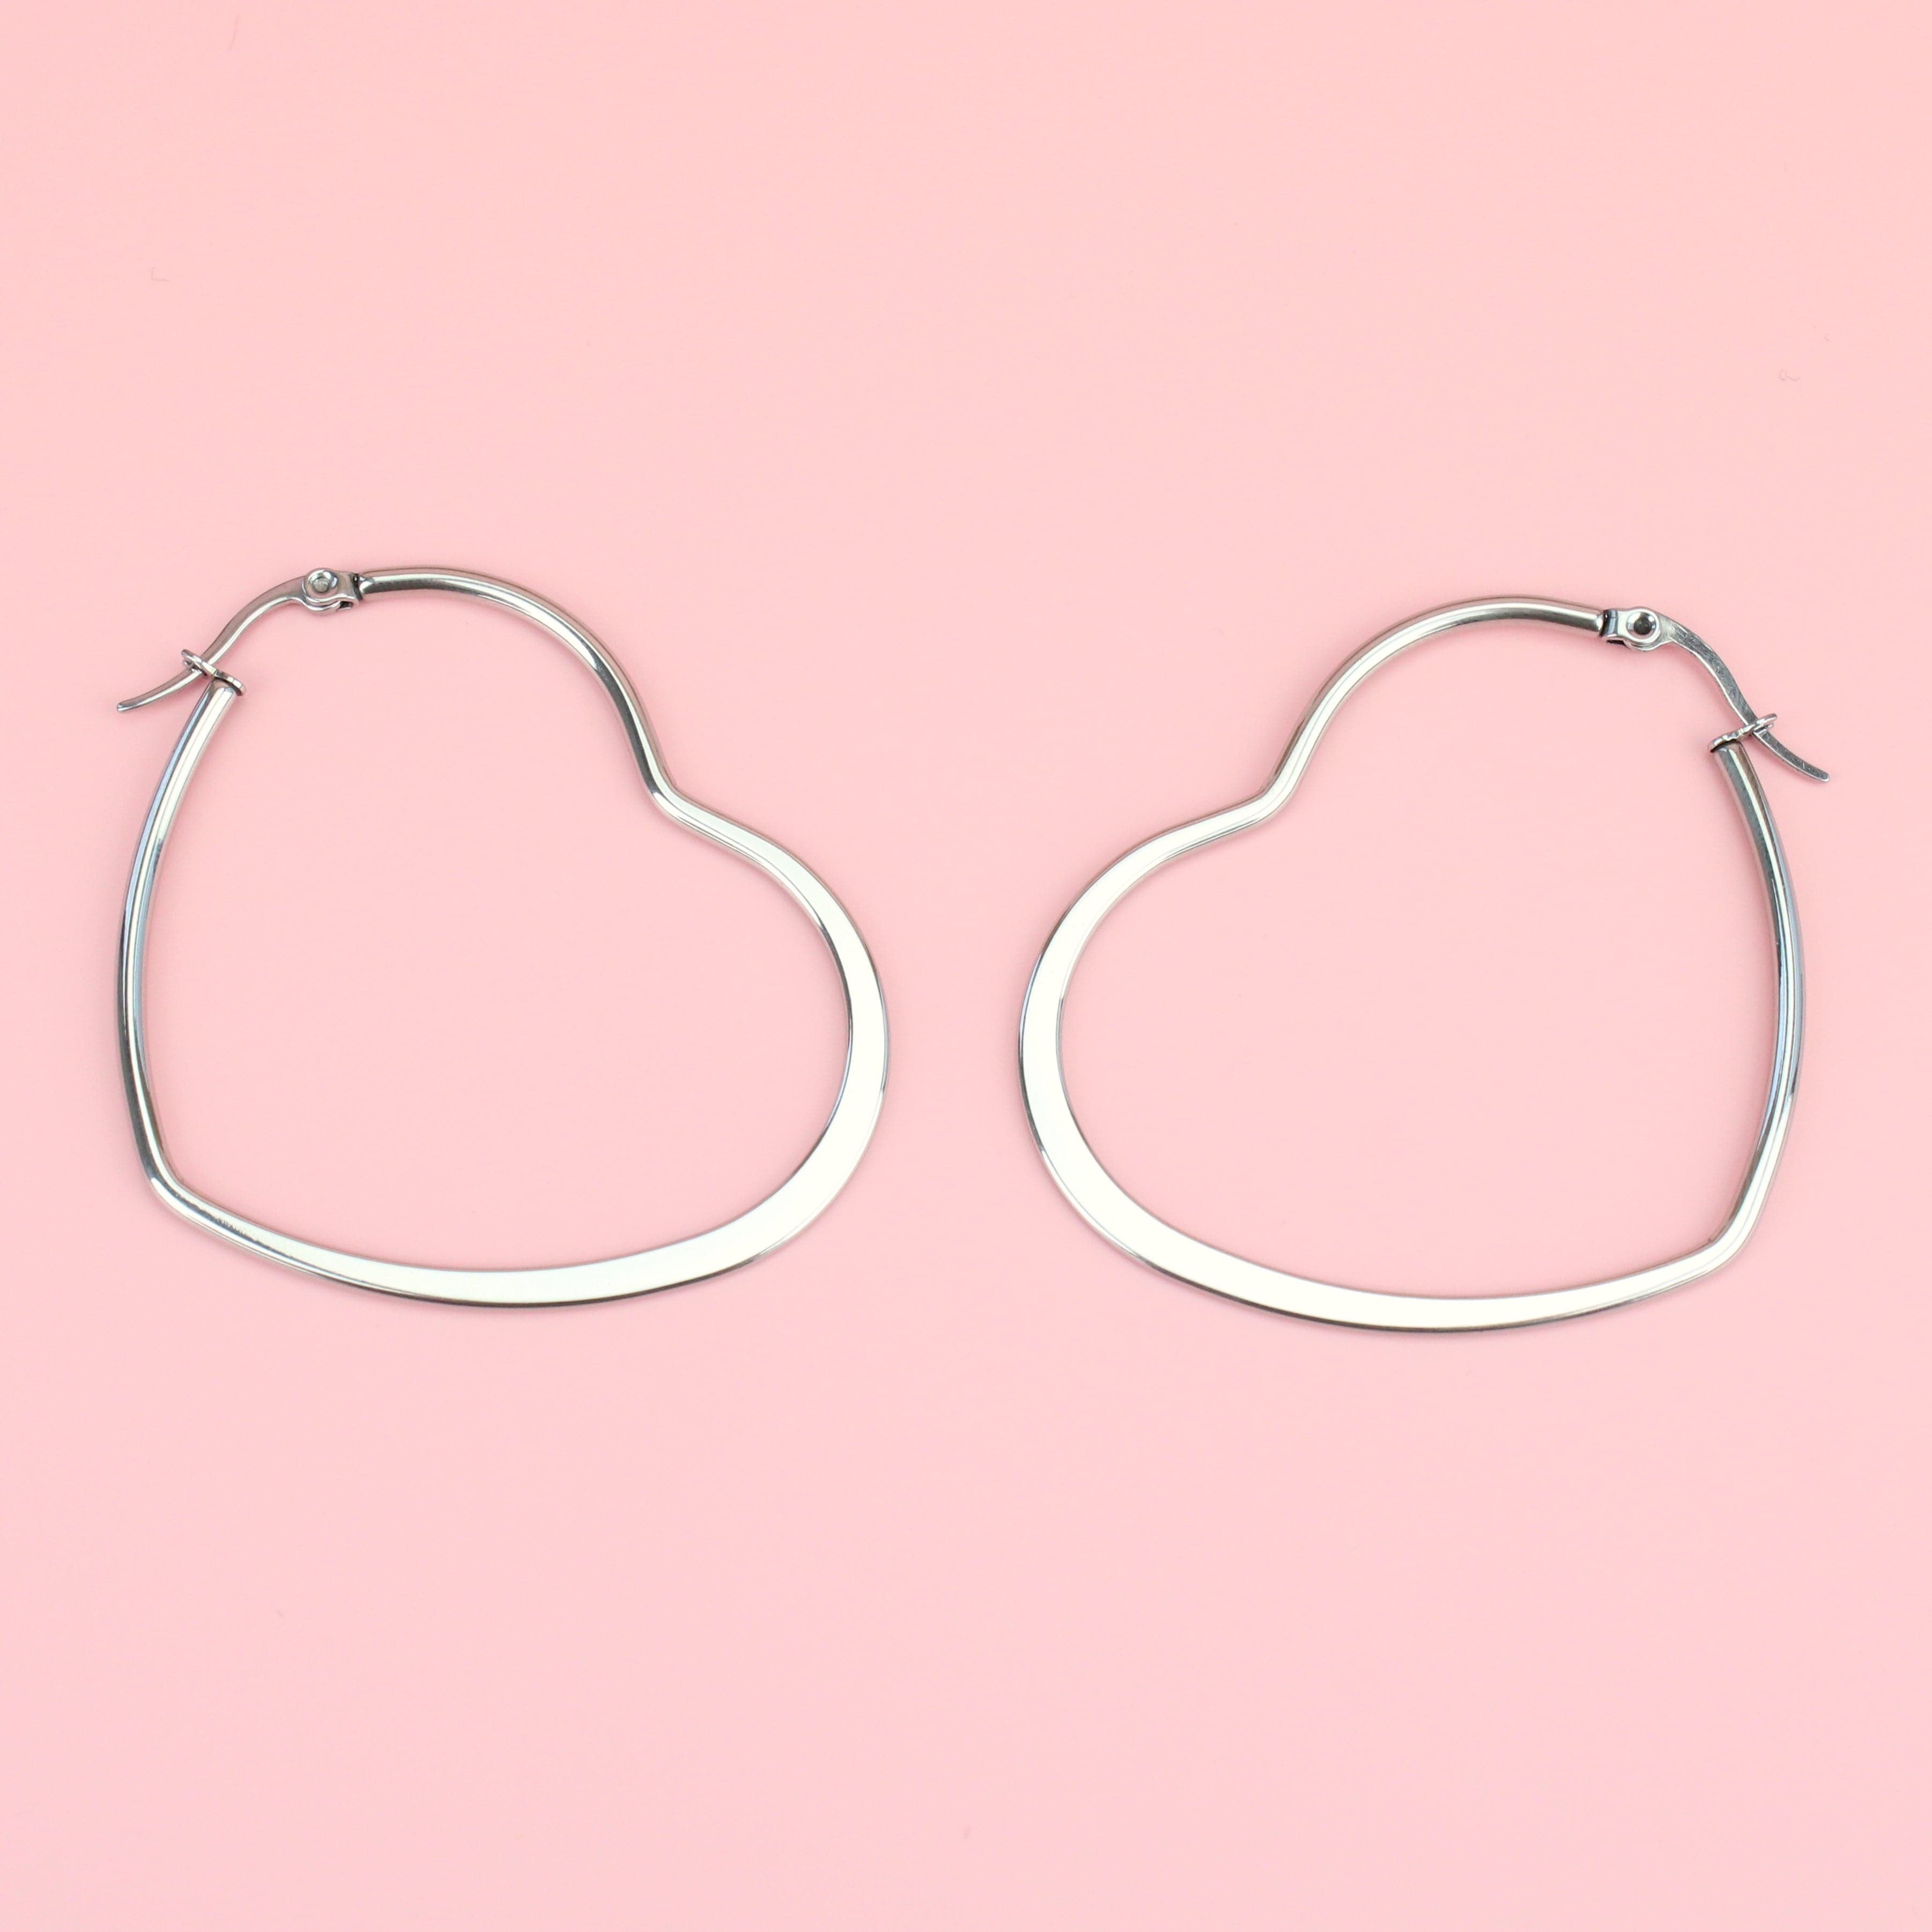 Heart Hoop Earrings Sterling Silver 45mm